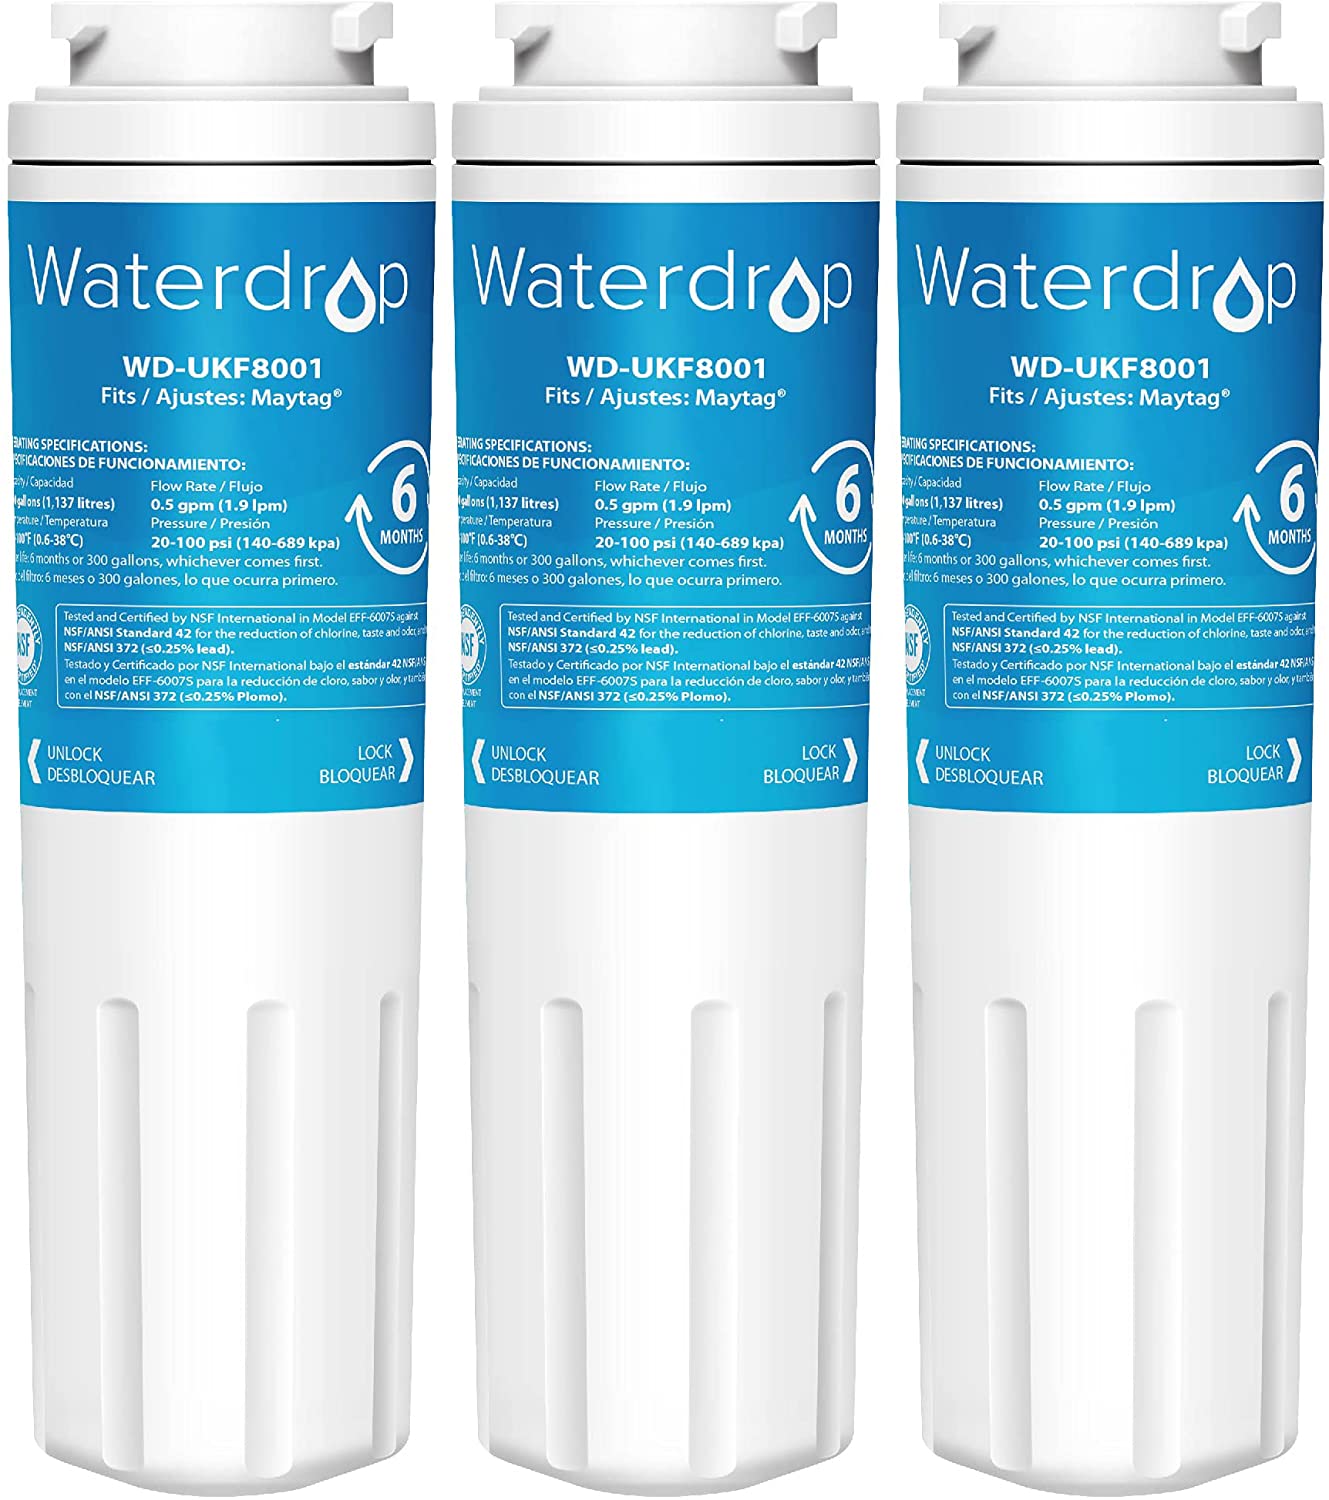 Waterdrop ukf8001 water filter